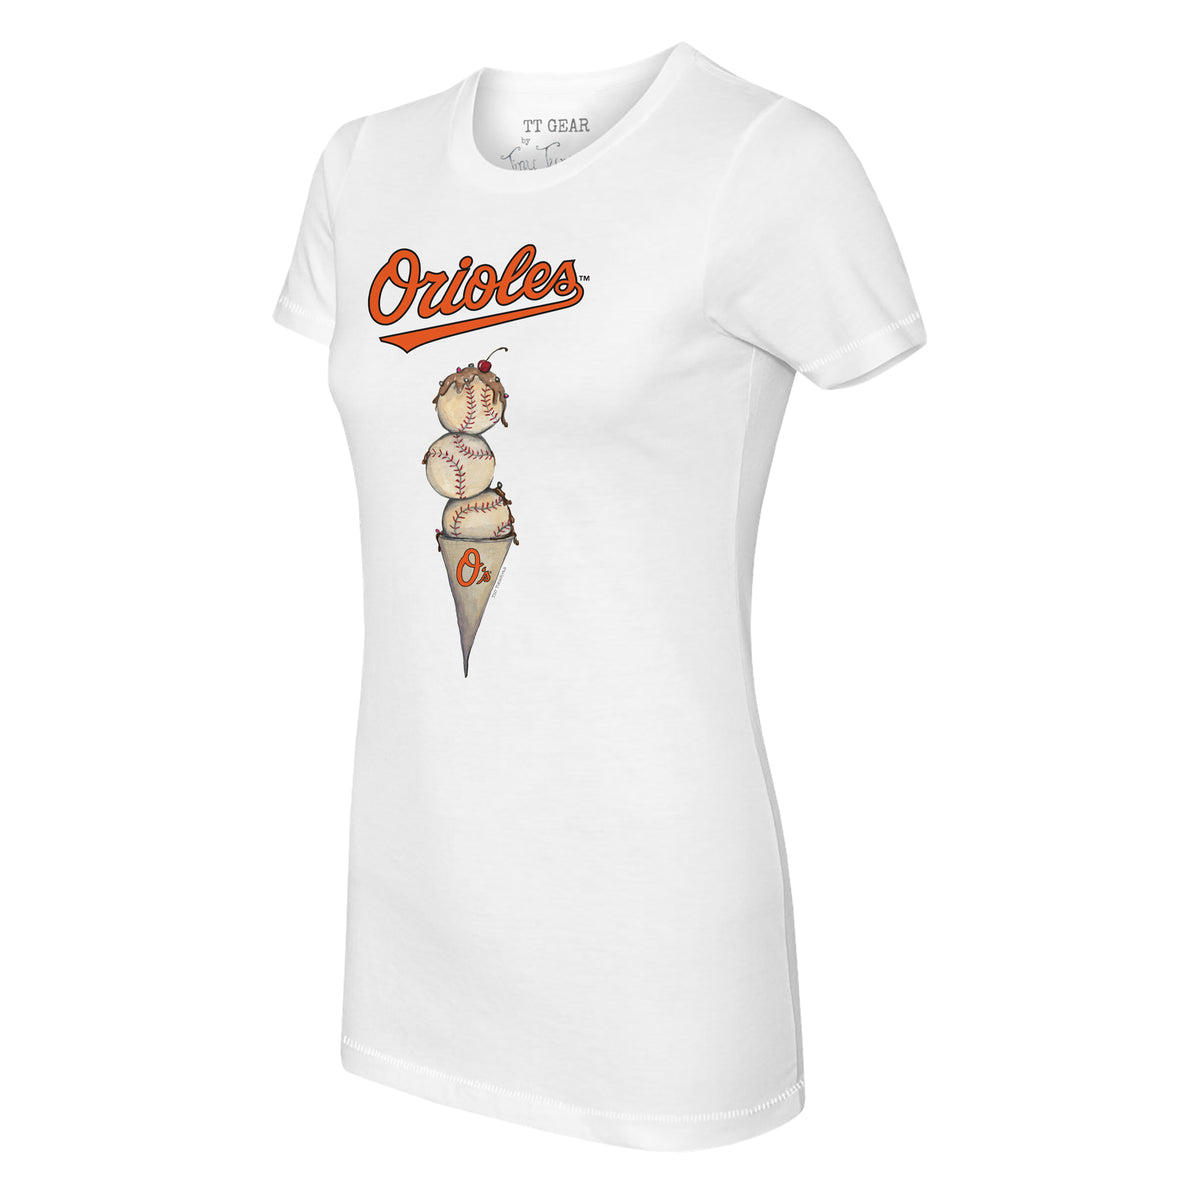 Baltimore Orioles Slugger Tee Shirt 18M / White